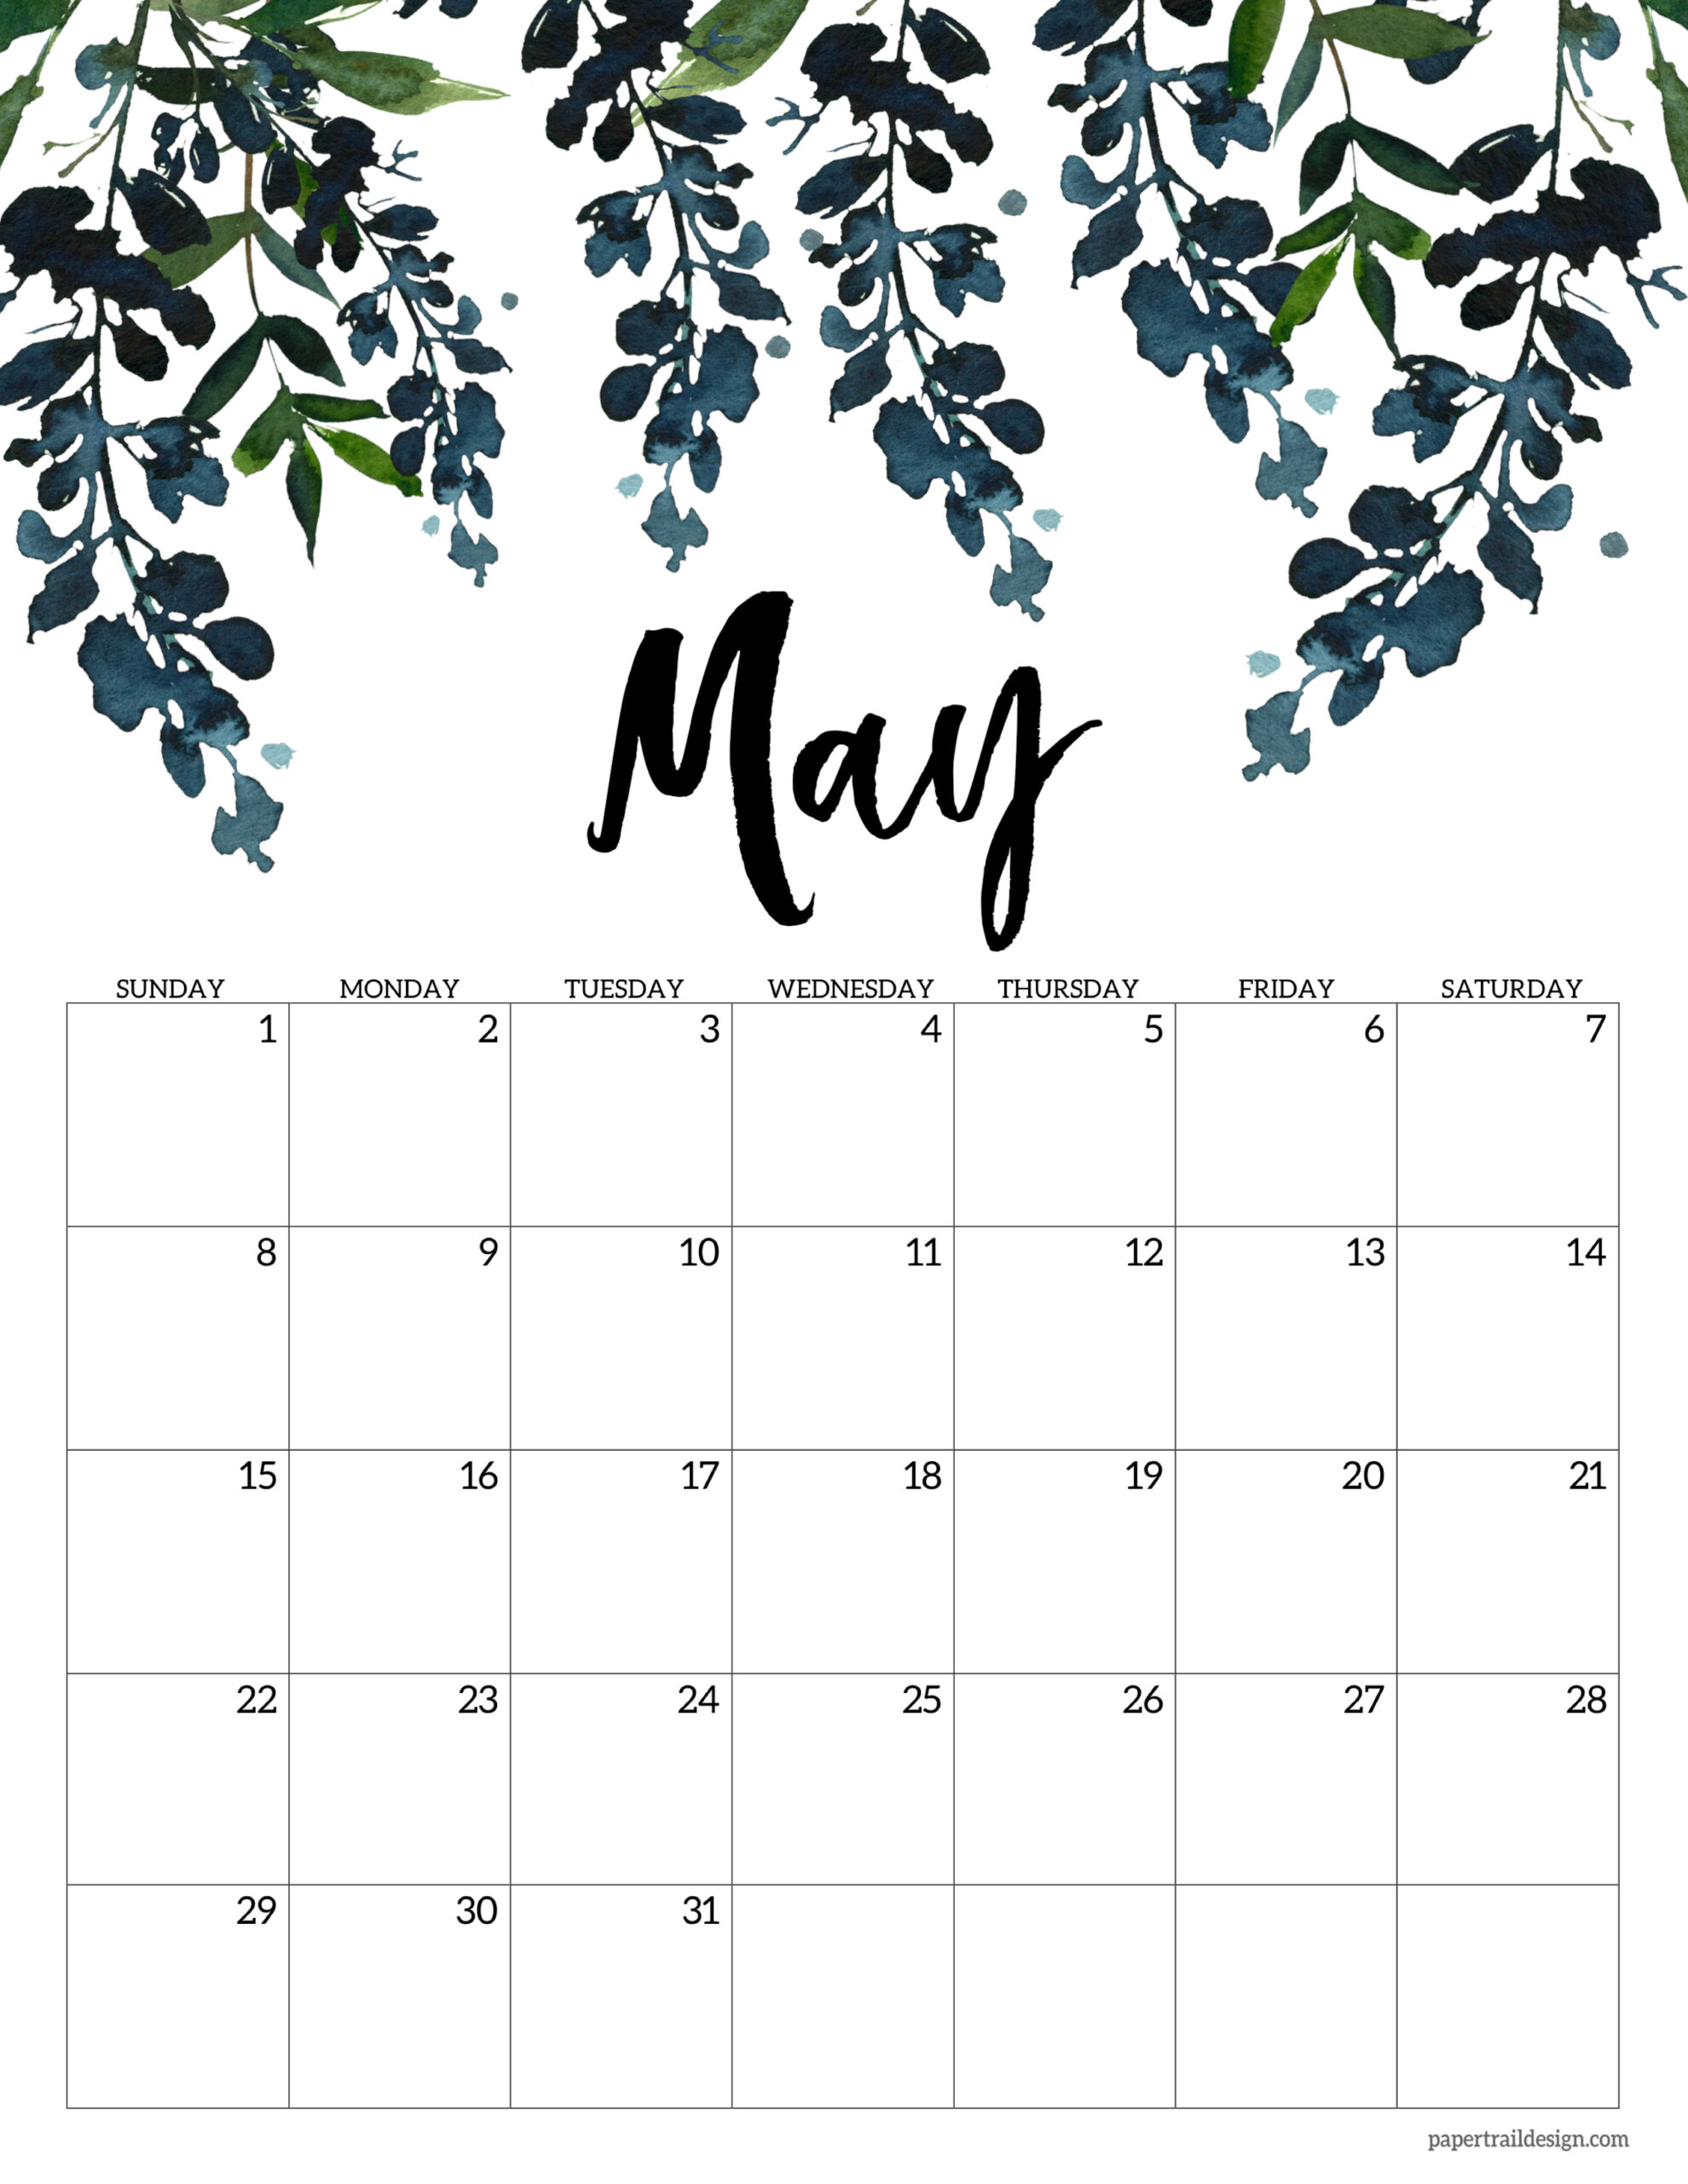 May 2022 Calendar Printable Free 2022 Calendar Printable - Floral - Paper Trail Design